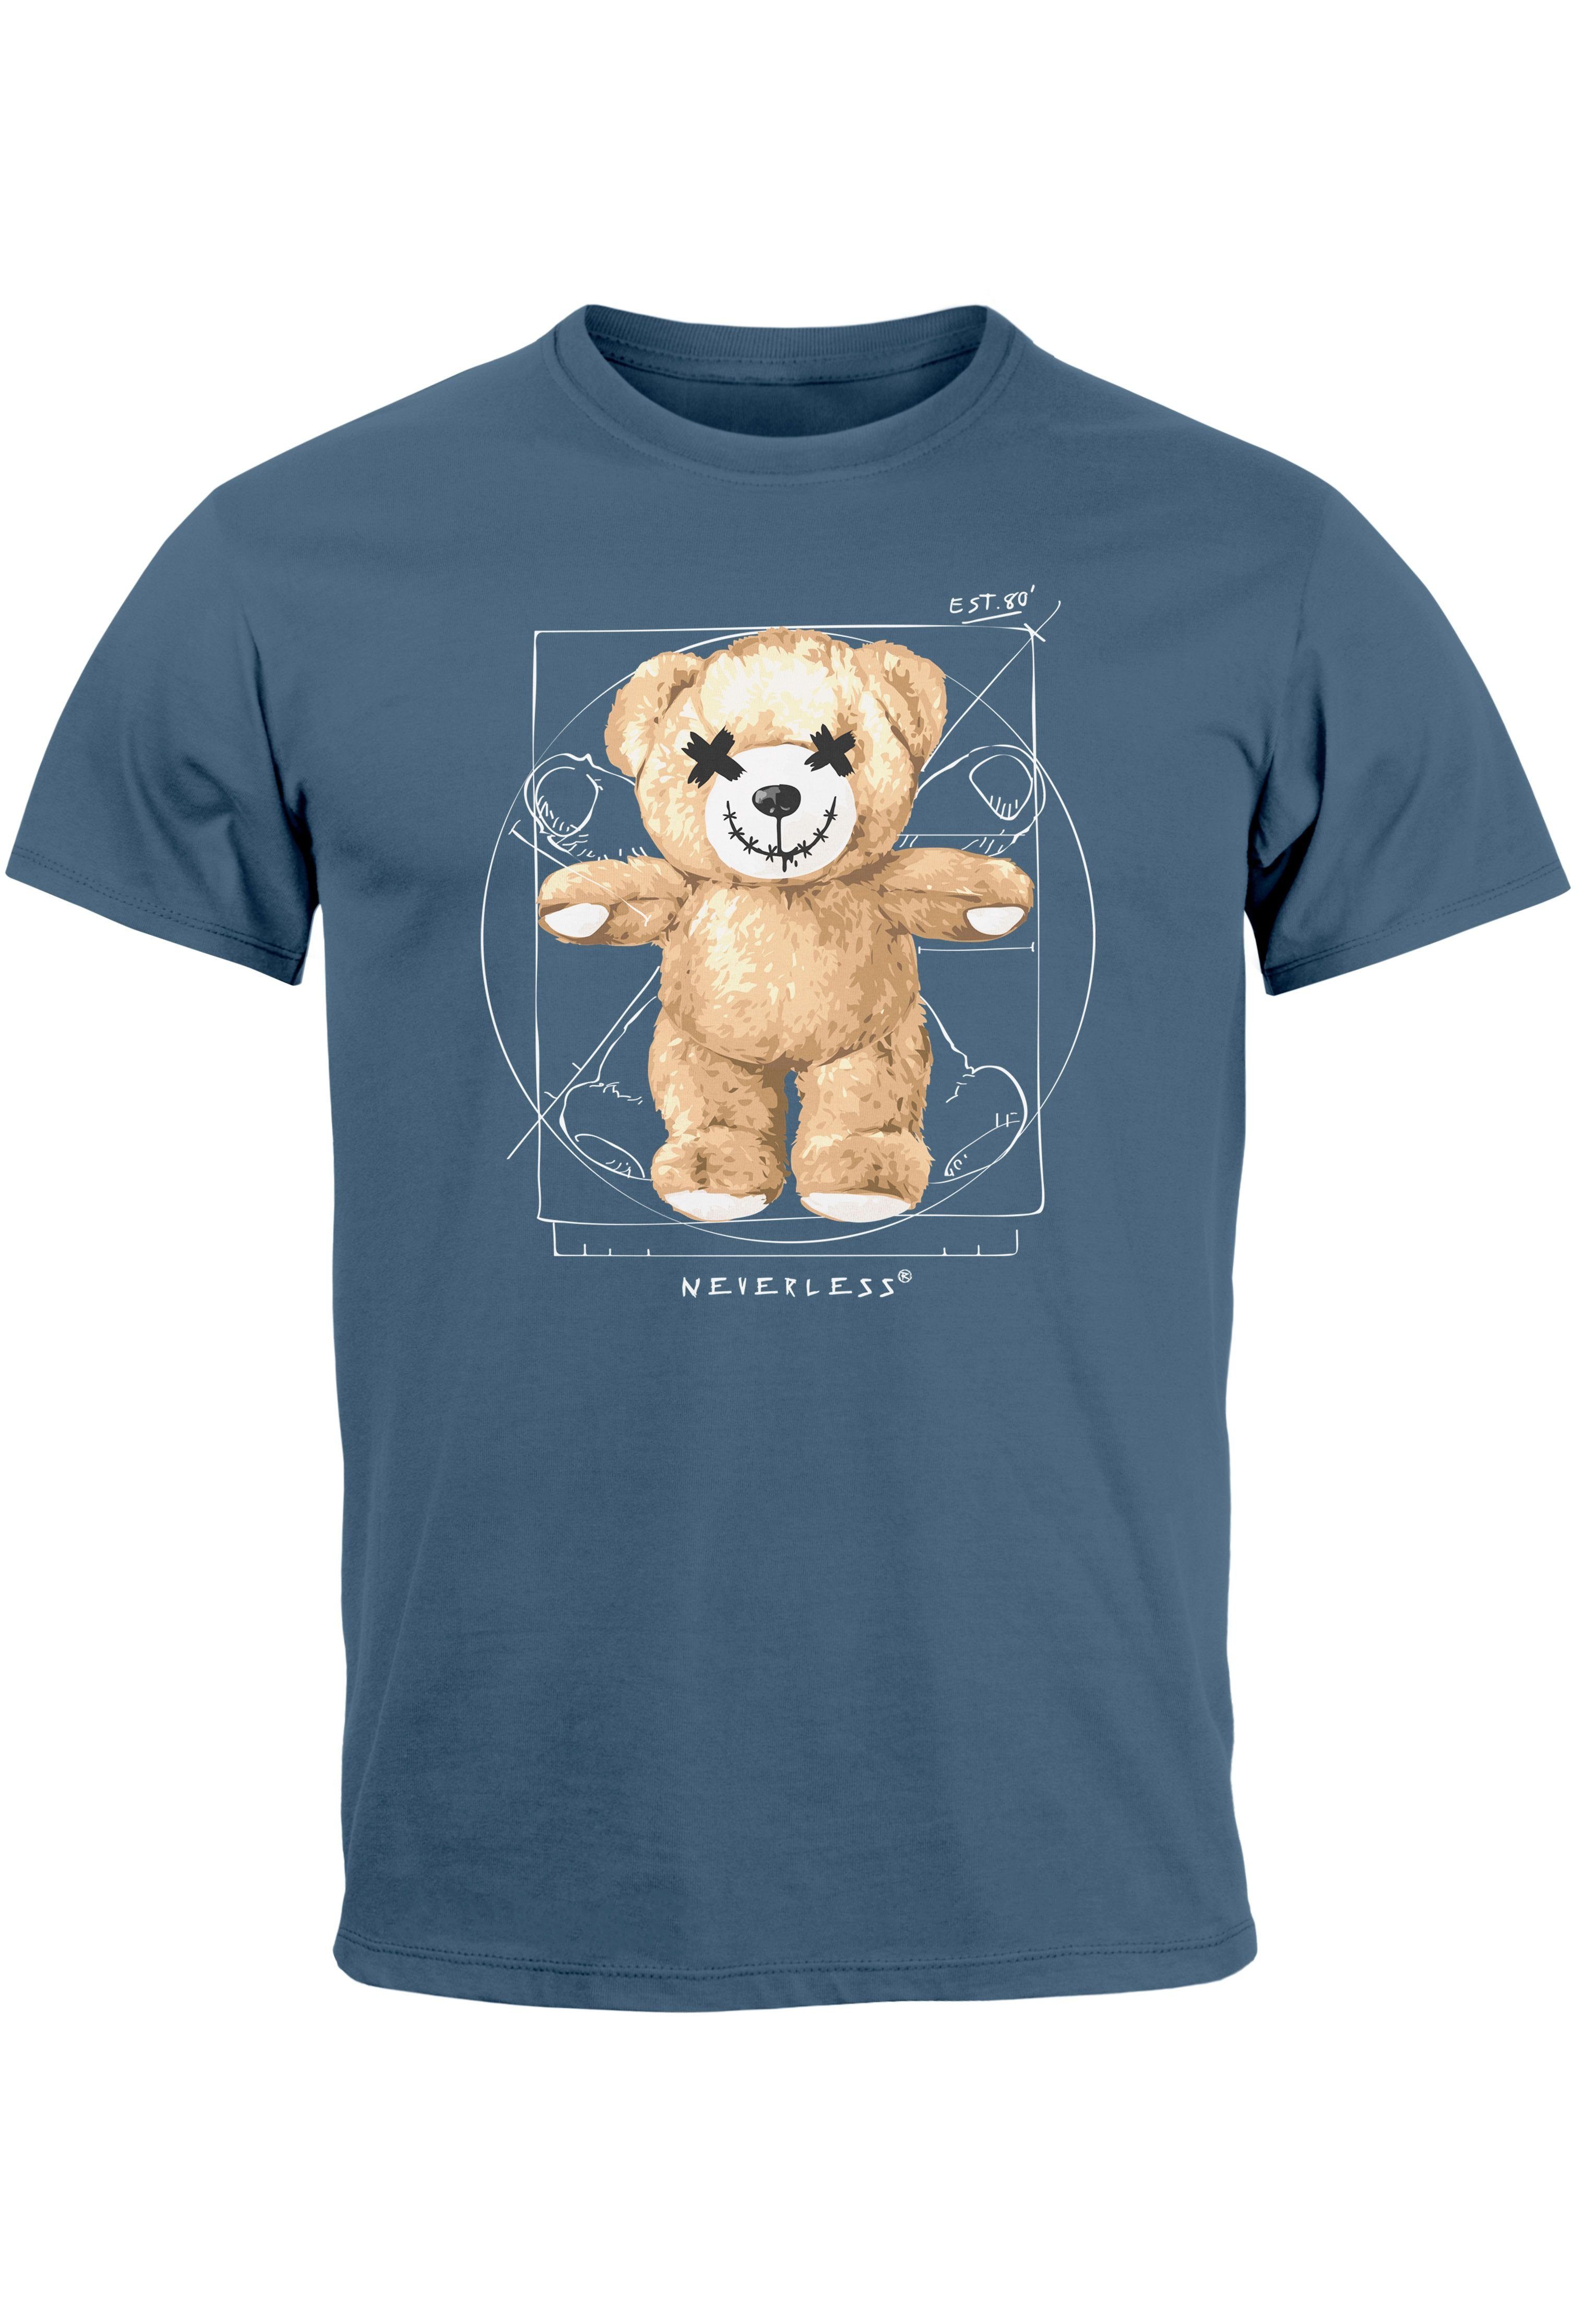 DaVinci Streetstyl T-Shirt Meme Herren Print Print-Shirt Fashion Parodie blue Bär Neverless Print denim Teddy mit